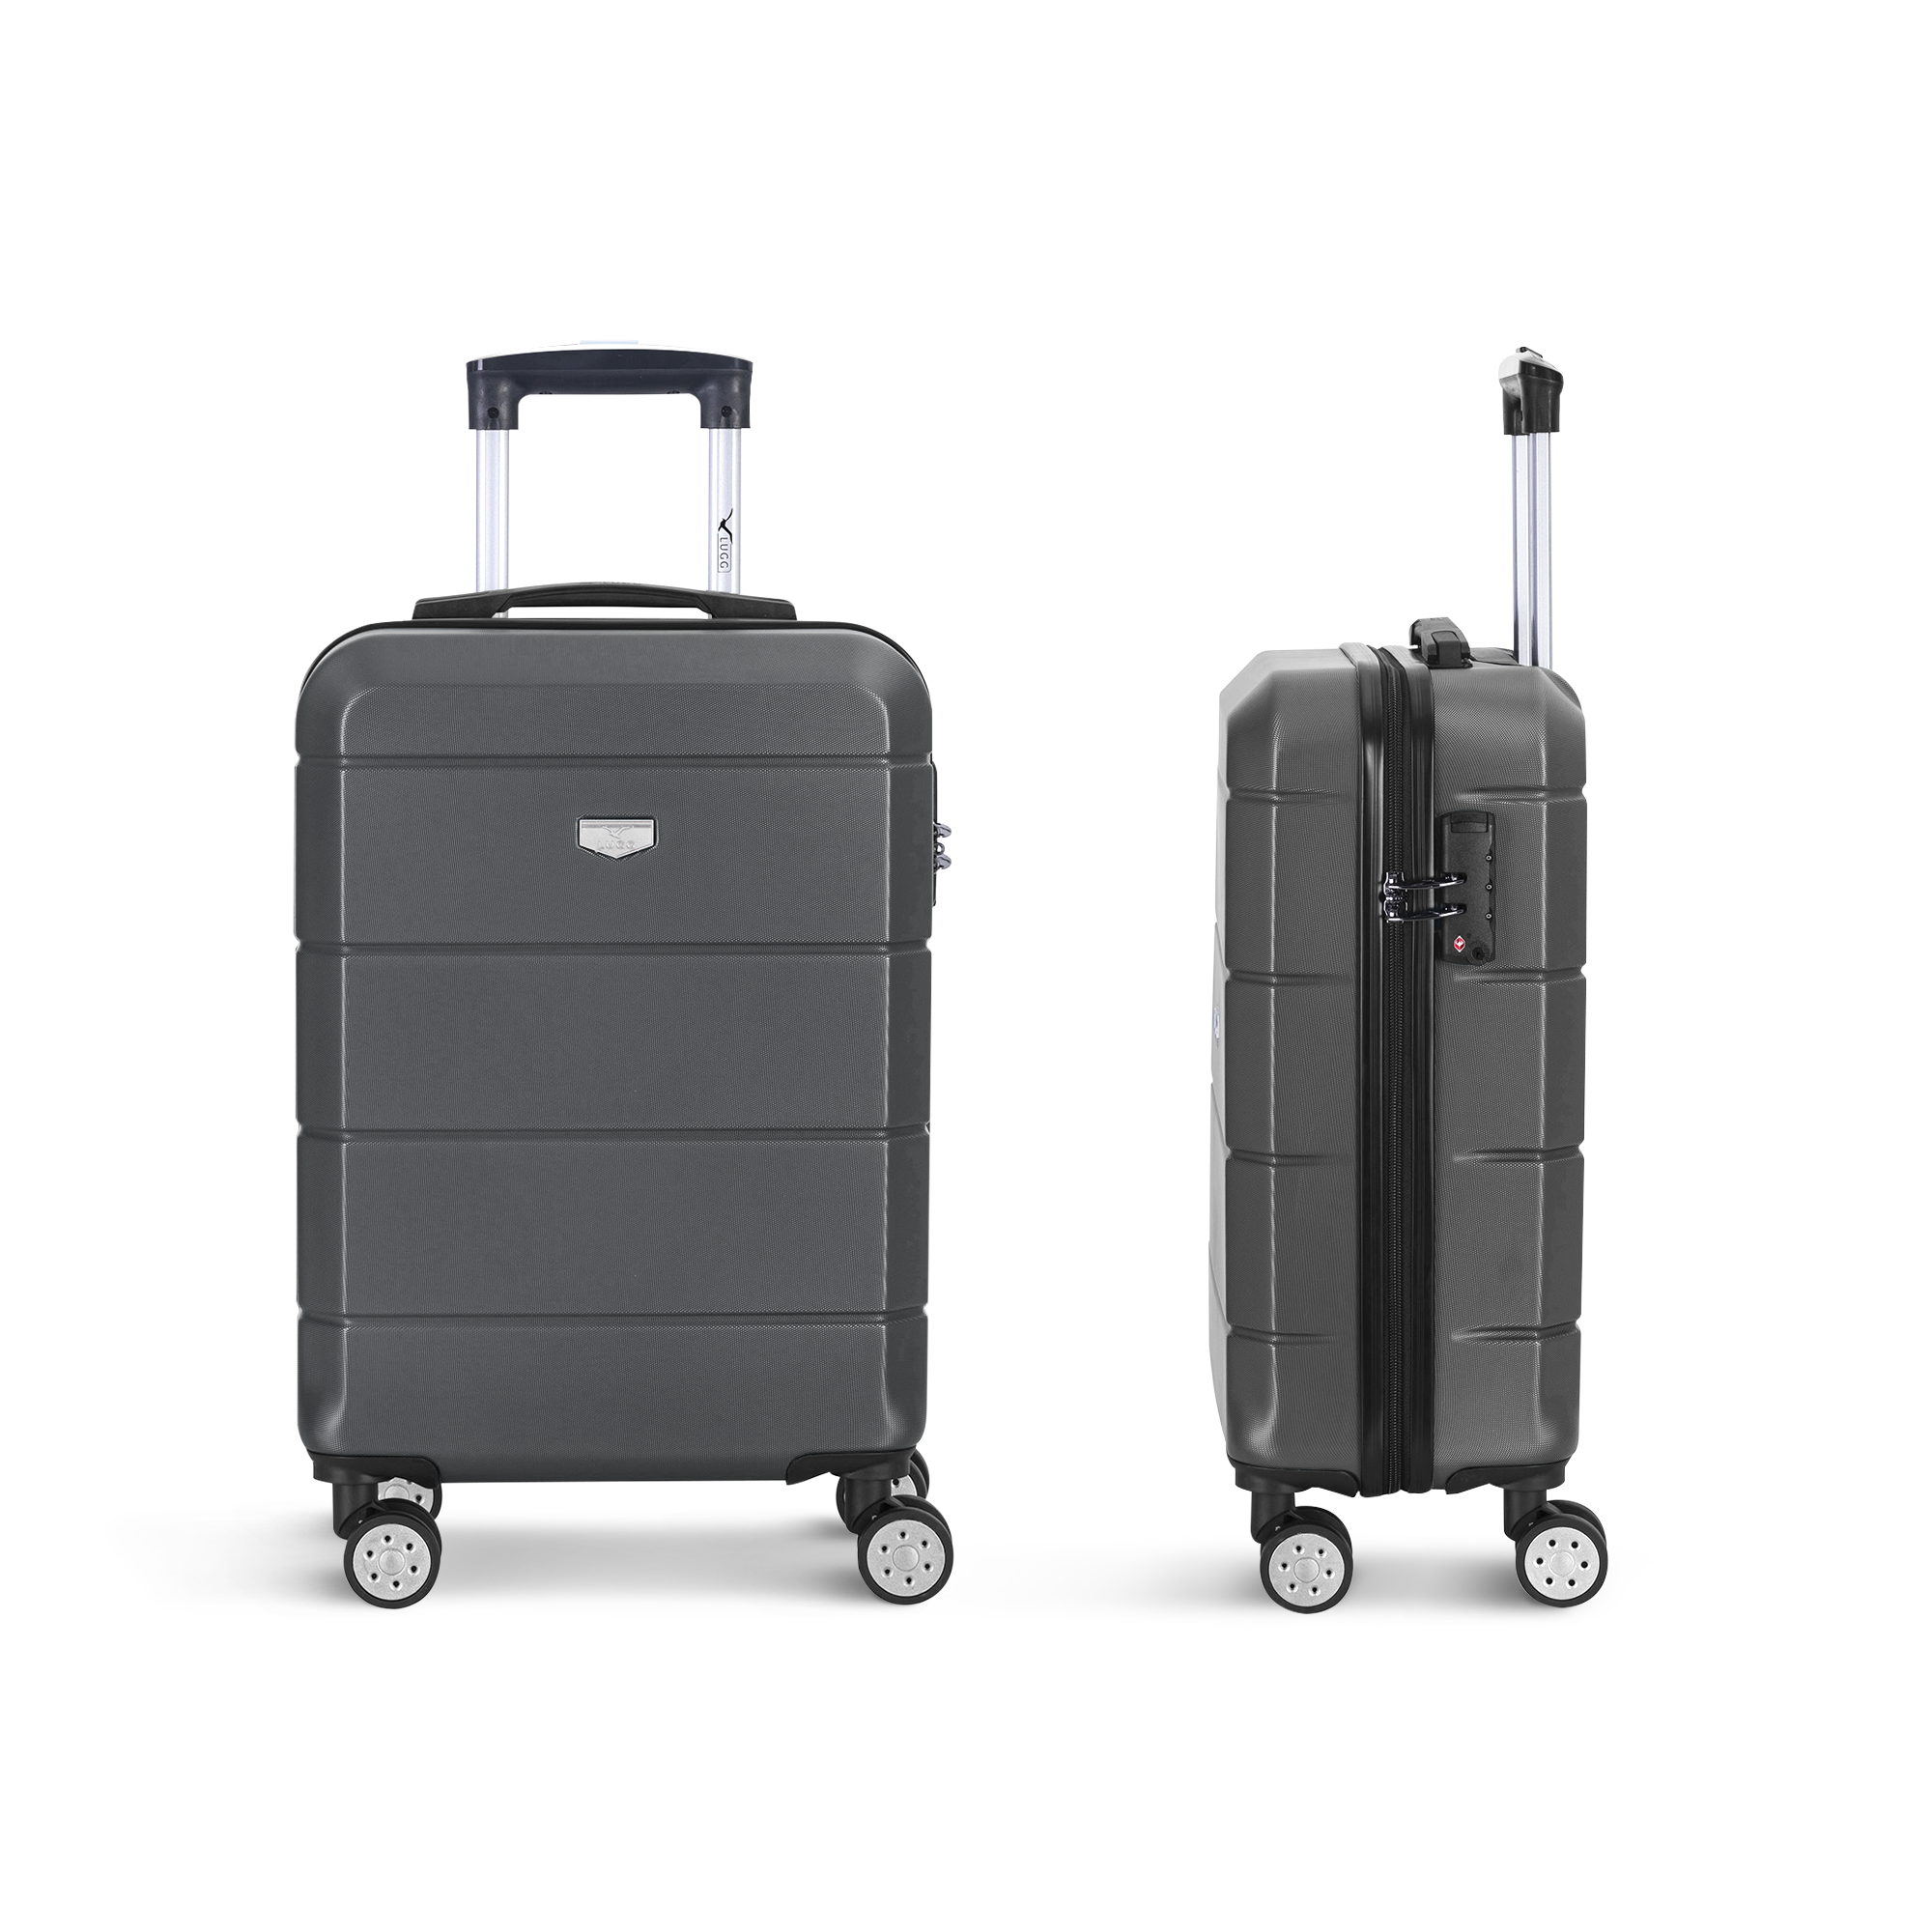 Jetset 20-Inch Suitcase in Gunmetal Grey